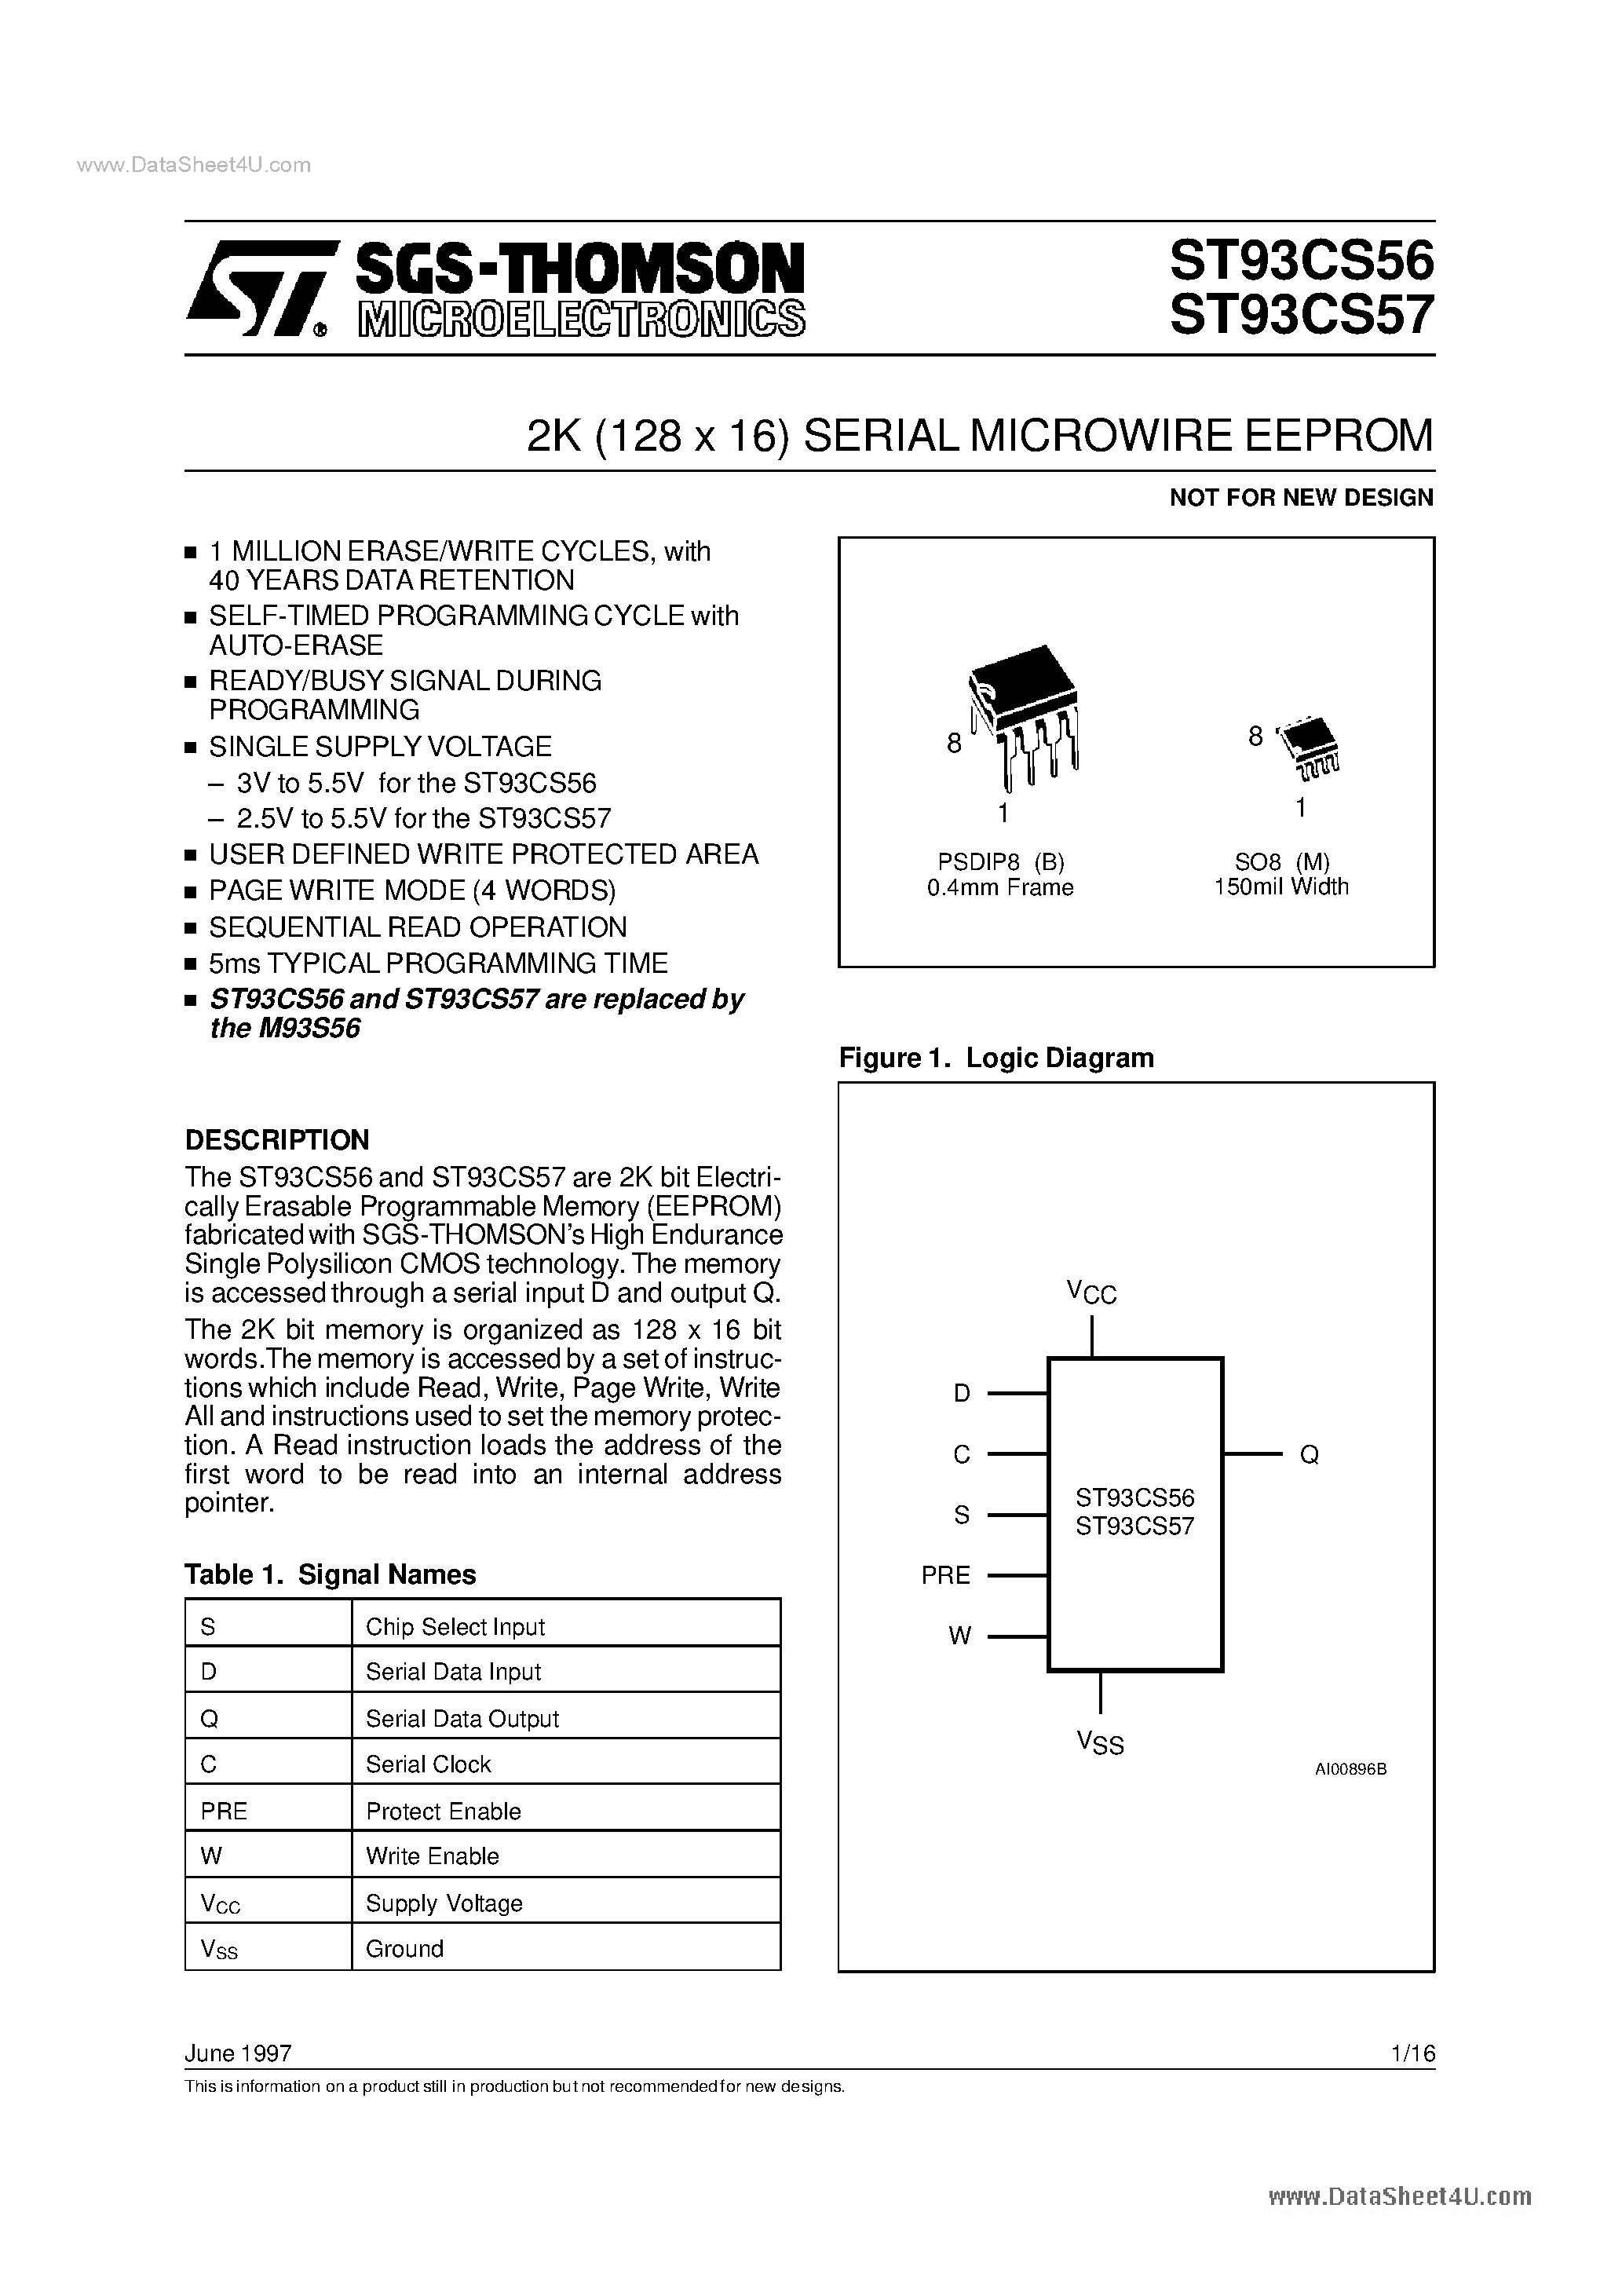 Даташит ST93CS56 - (ST93CS56 / ST93CS57) 2K 128 x 16 SERIAL MICROWIRE EEPROM страница 1